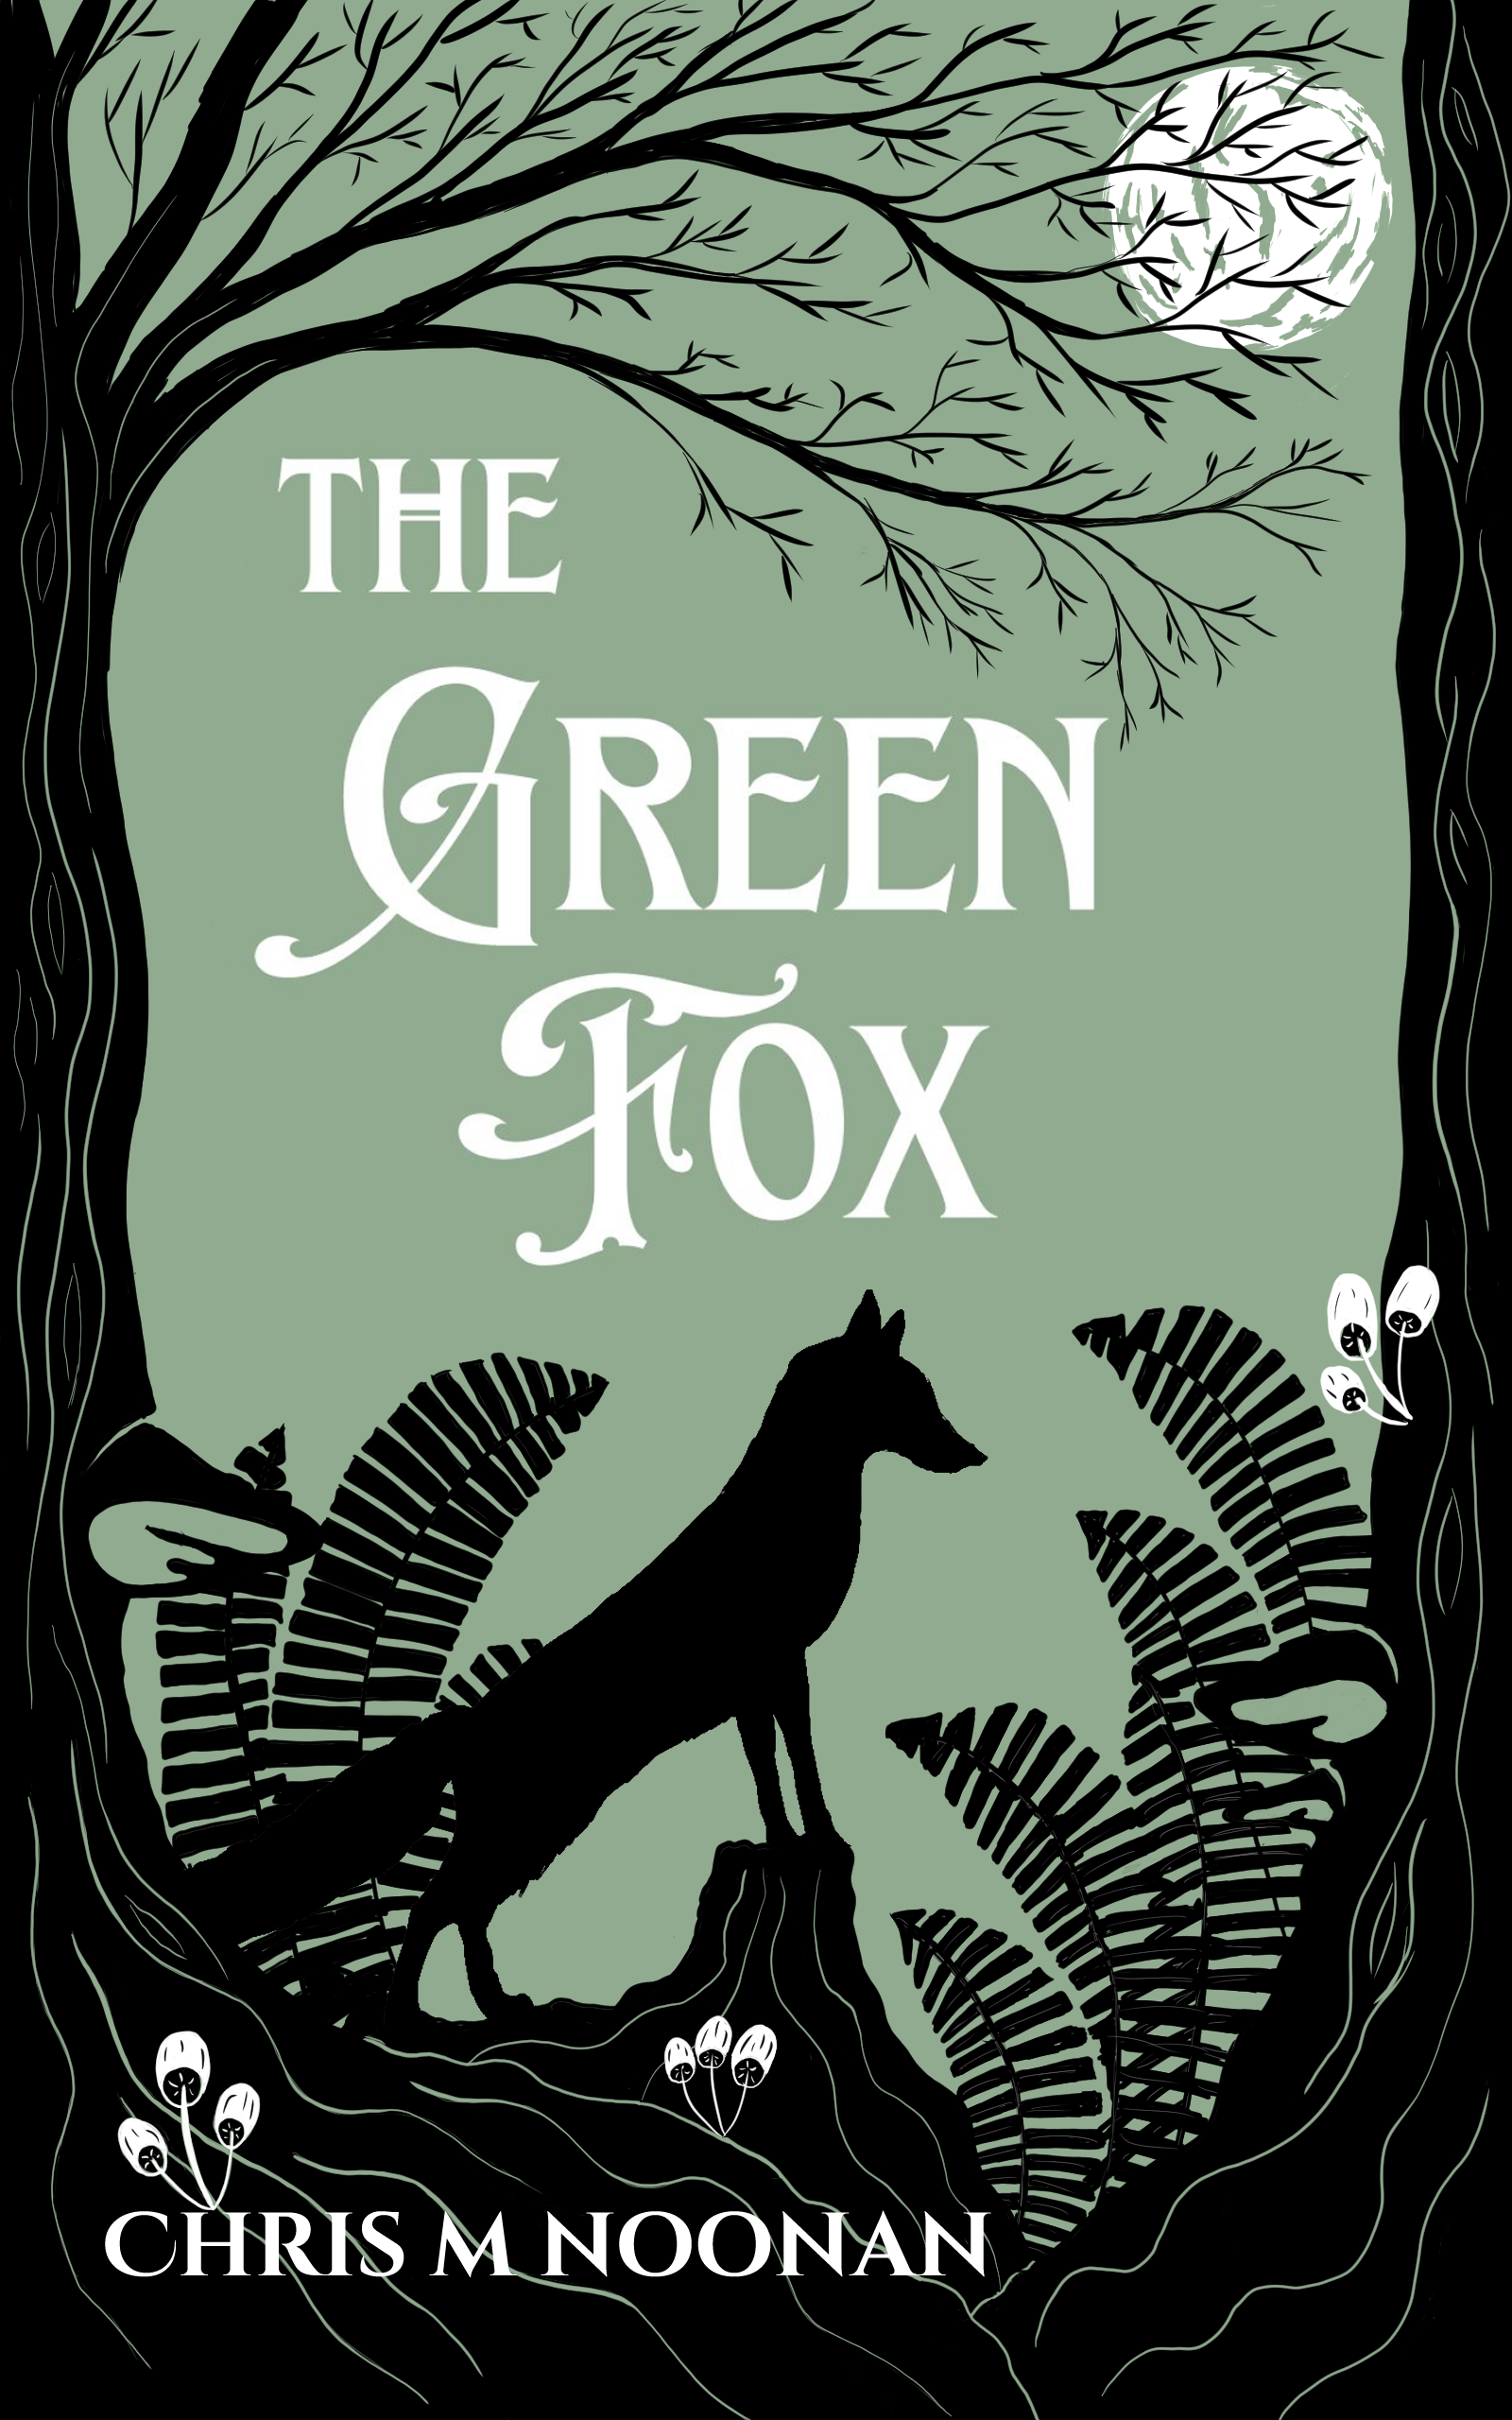 The Green Fox.jpg